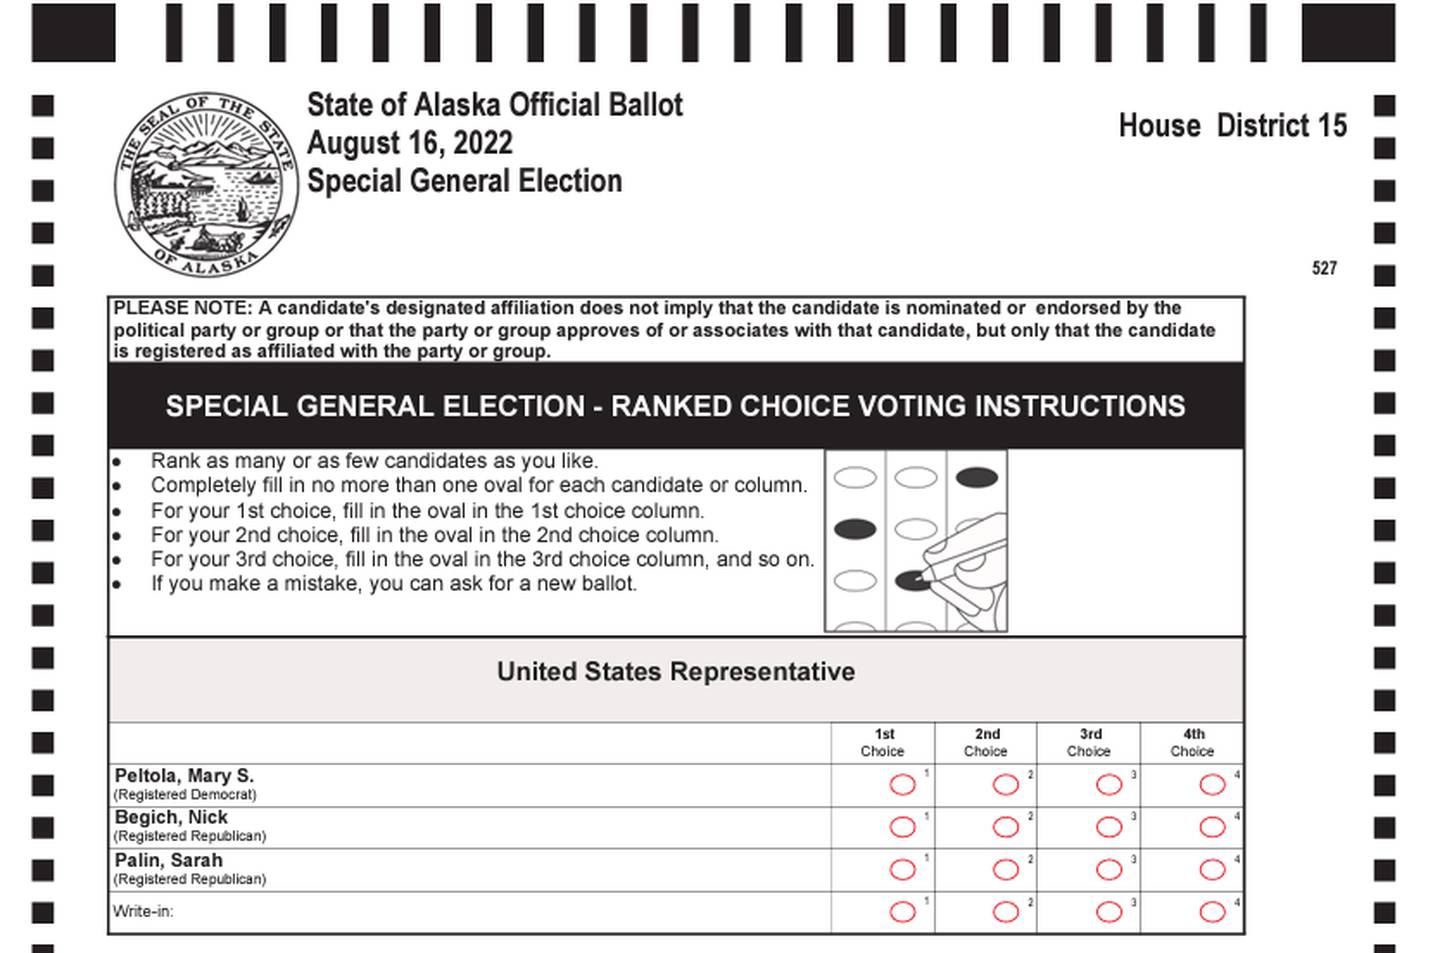 Sample ballot ranked choice voting US House race